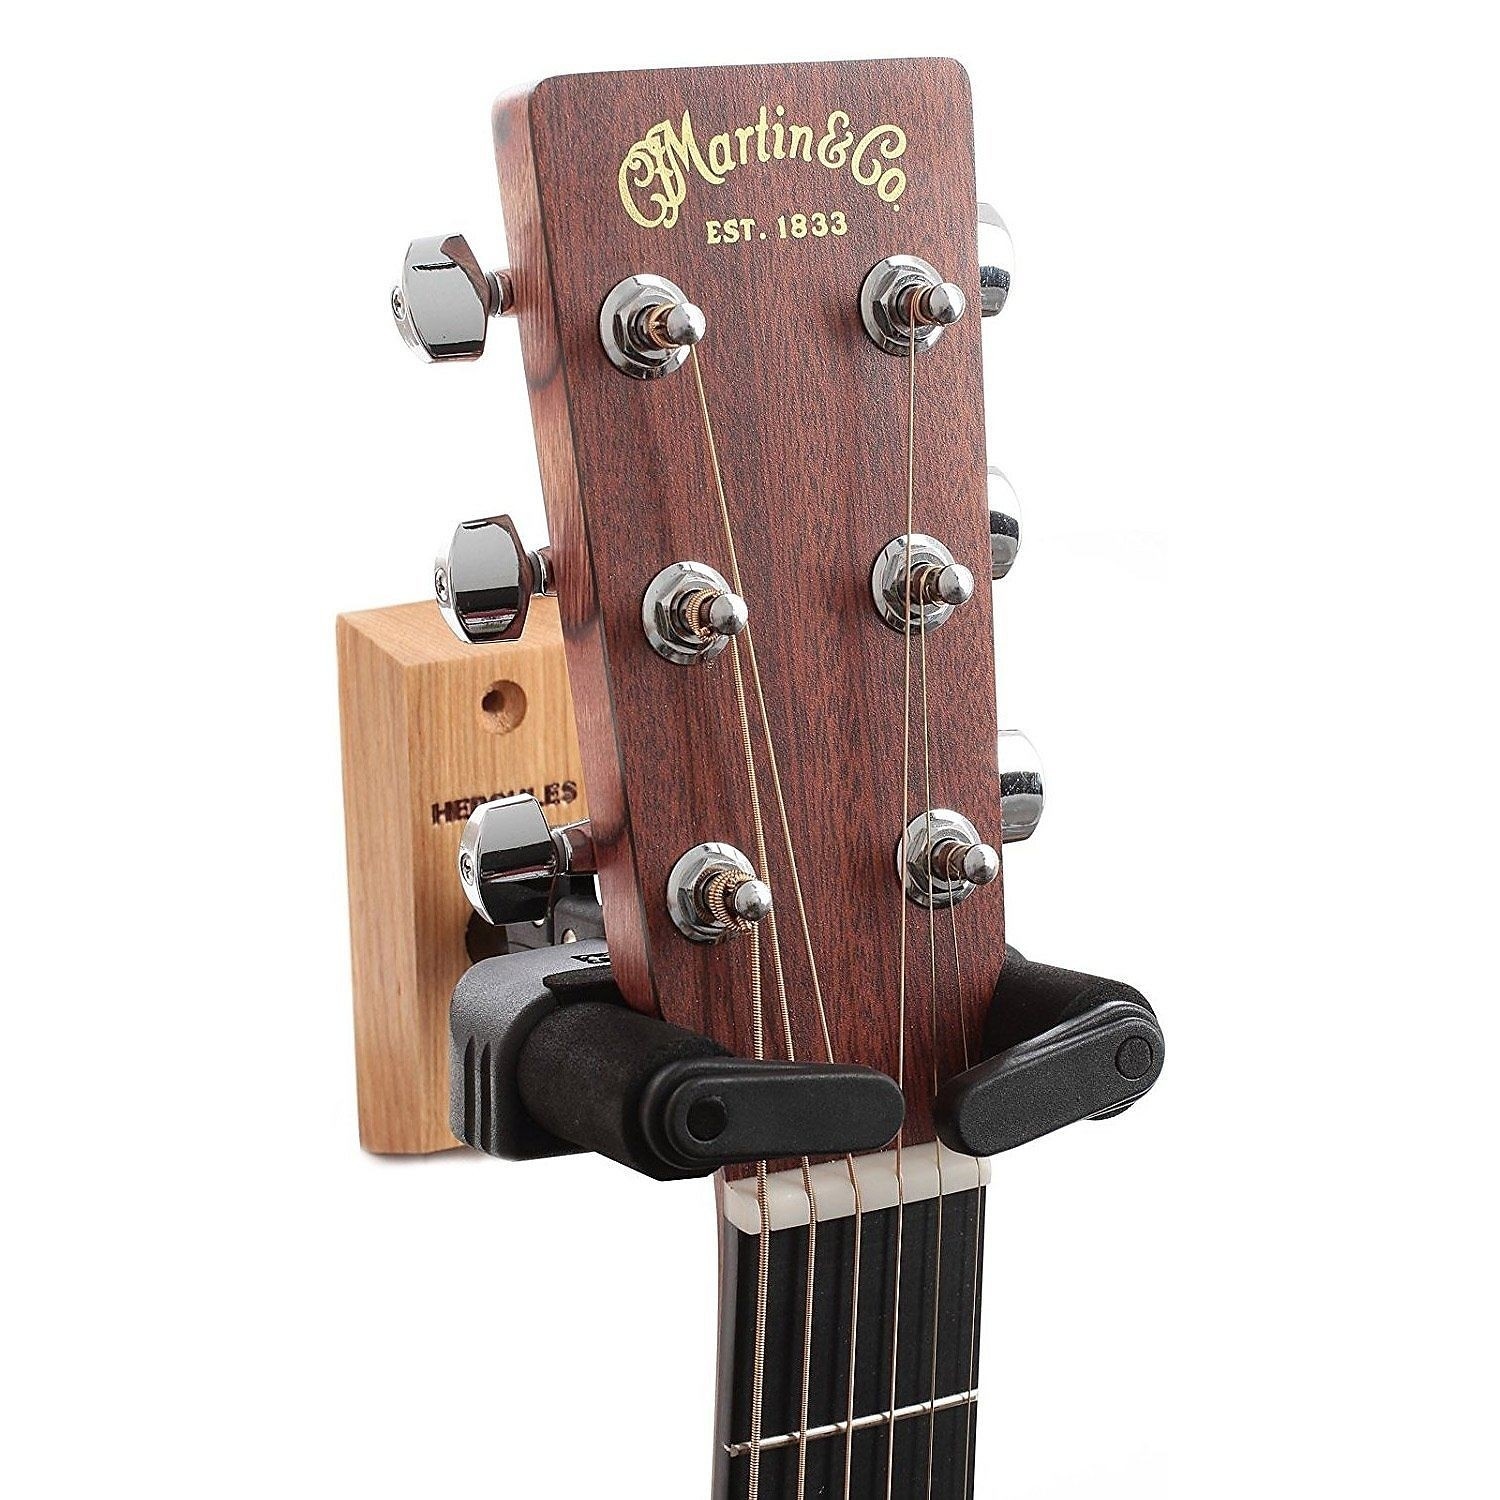 Levendig Bewolkt Raar Hercules GSP38WB plus auto lock gitaar ophangbeugel wall guitar hanger -  Vox Humana